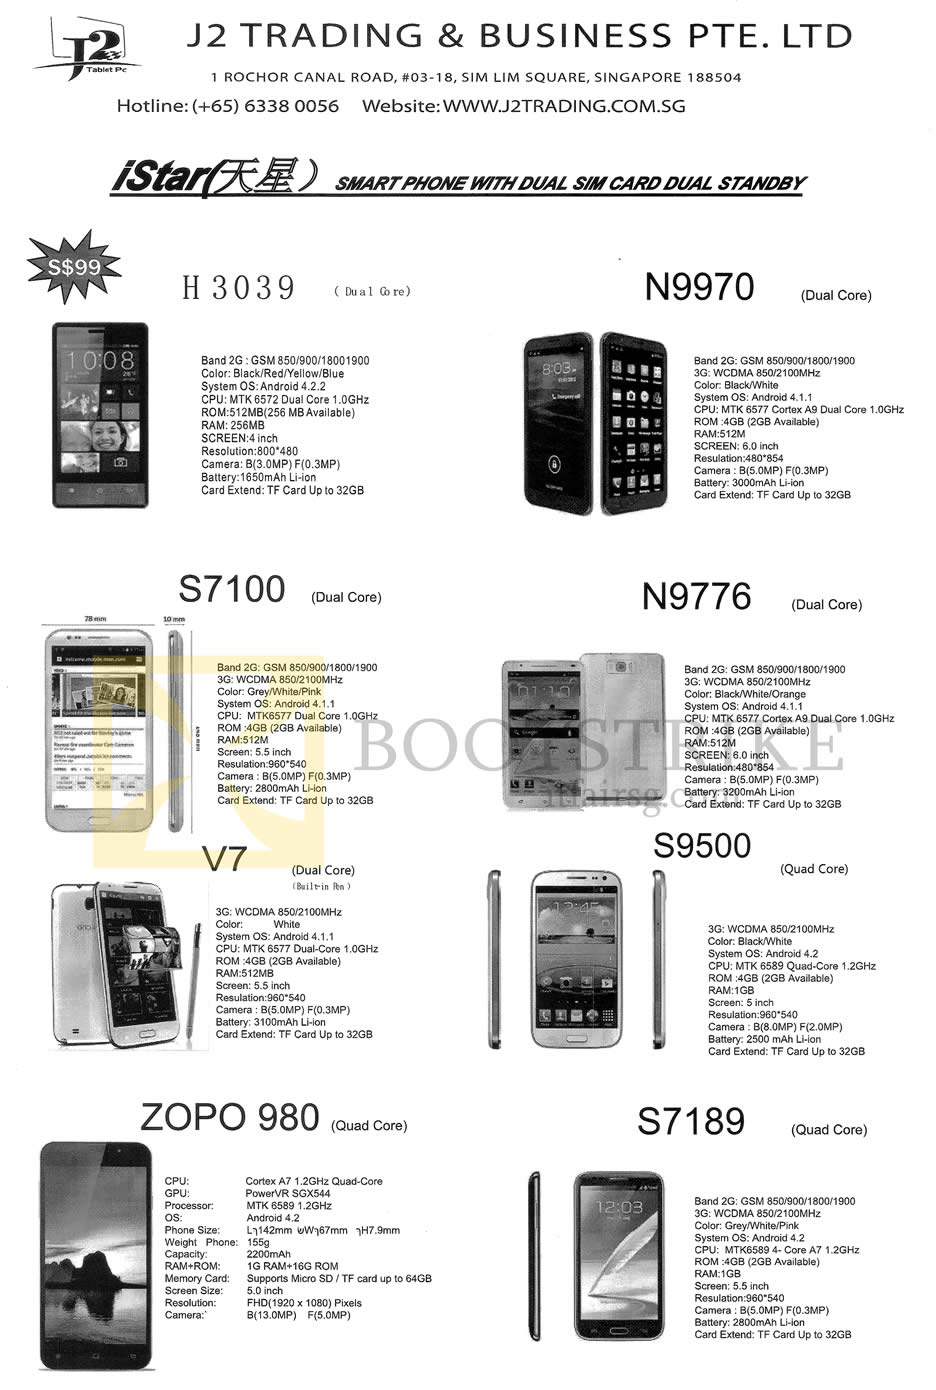 SITEX 2013 price list image brochure of J2 Trading Mobile S,artPhones H3039, N9970, S7100, N9776, S9500, V7, ZOPO980, S7189